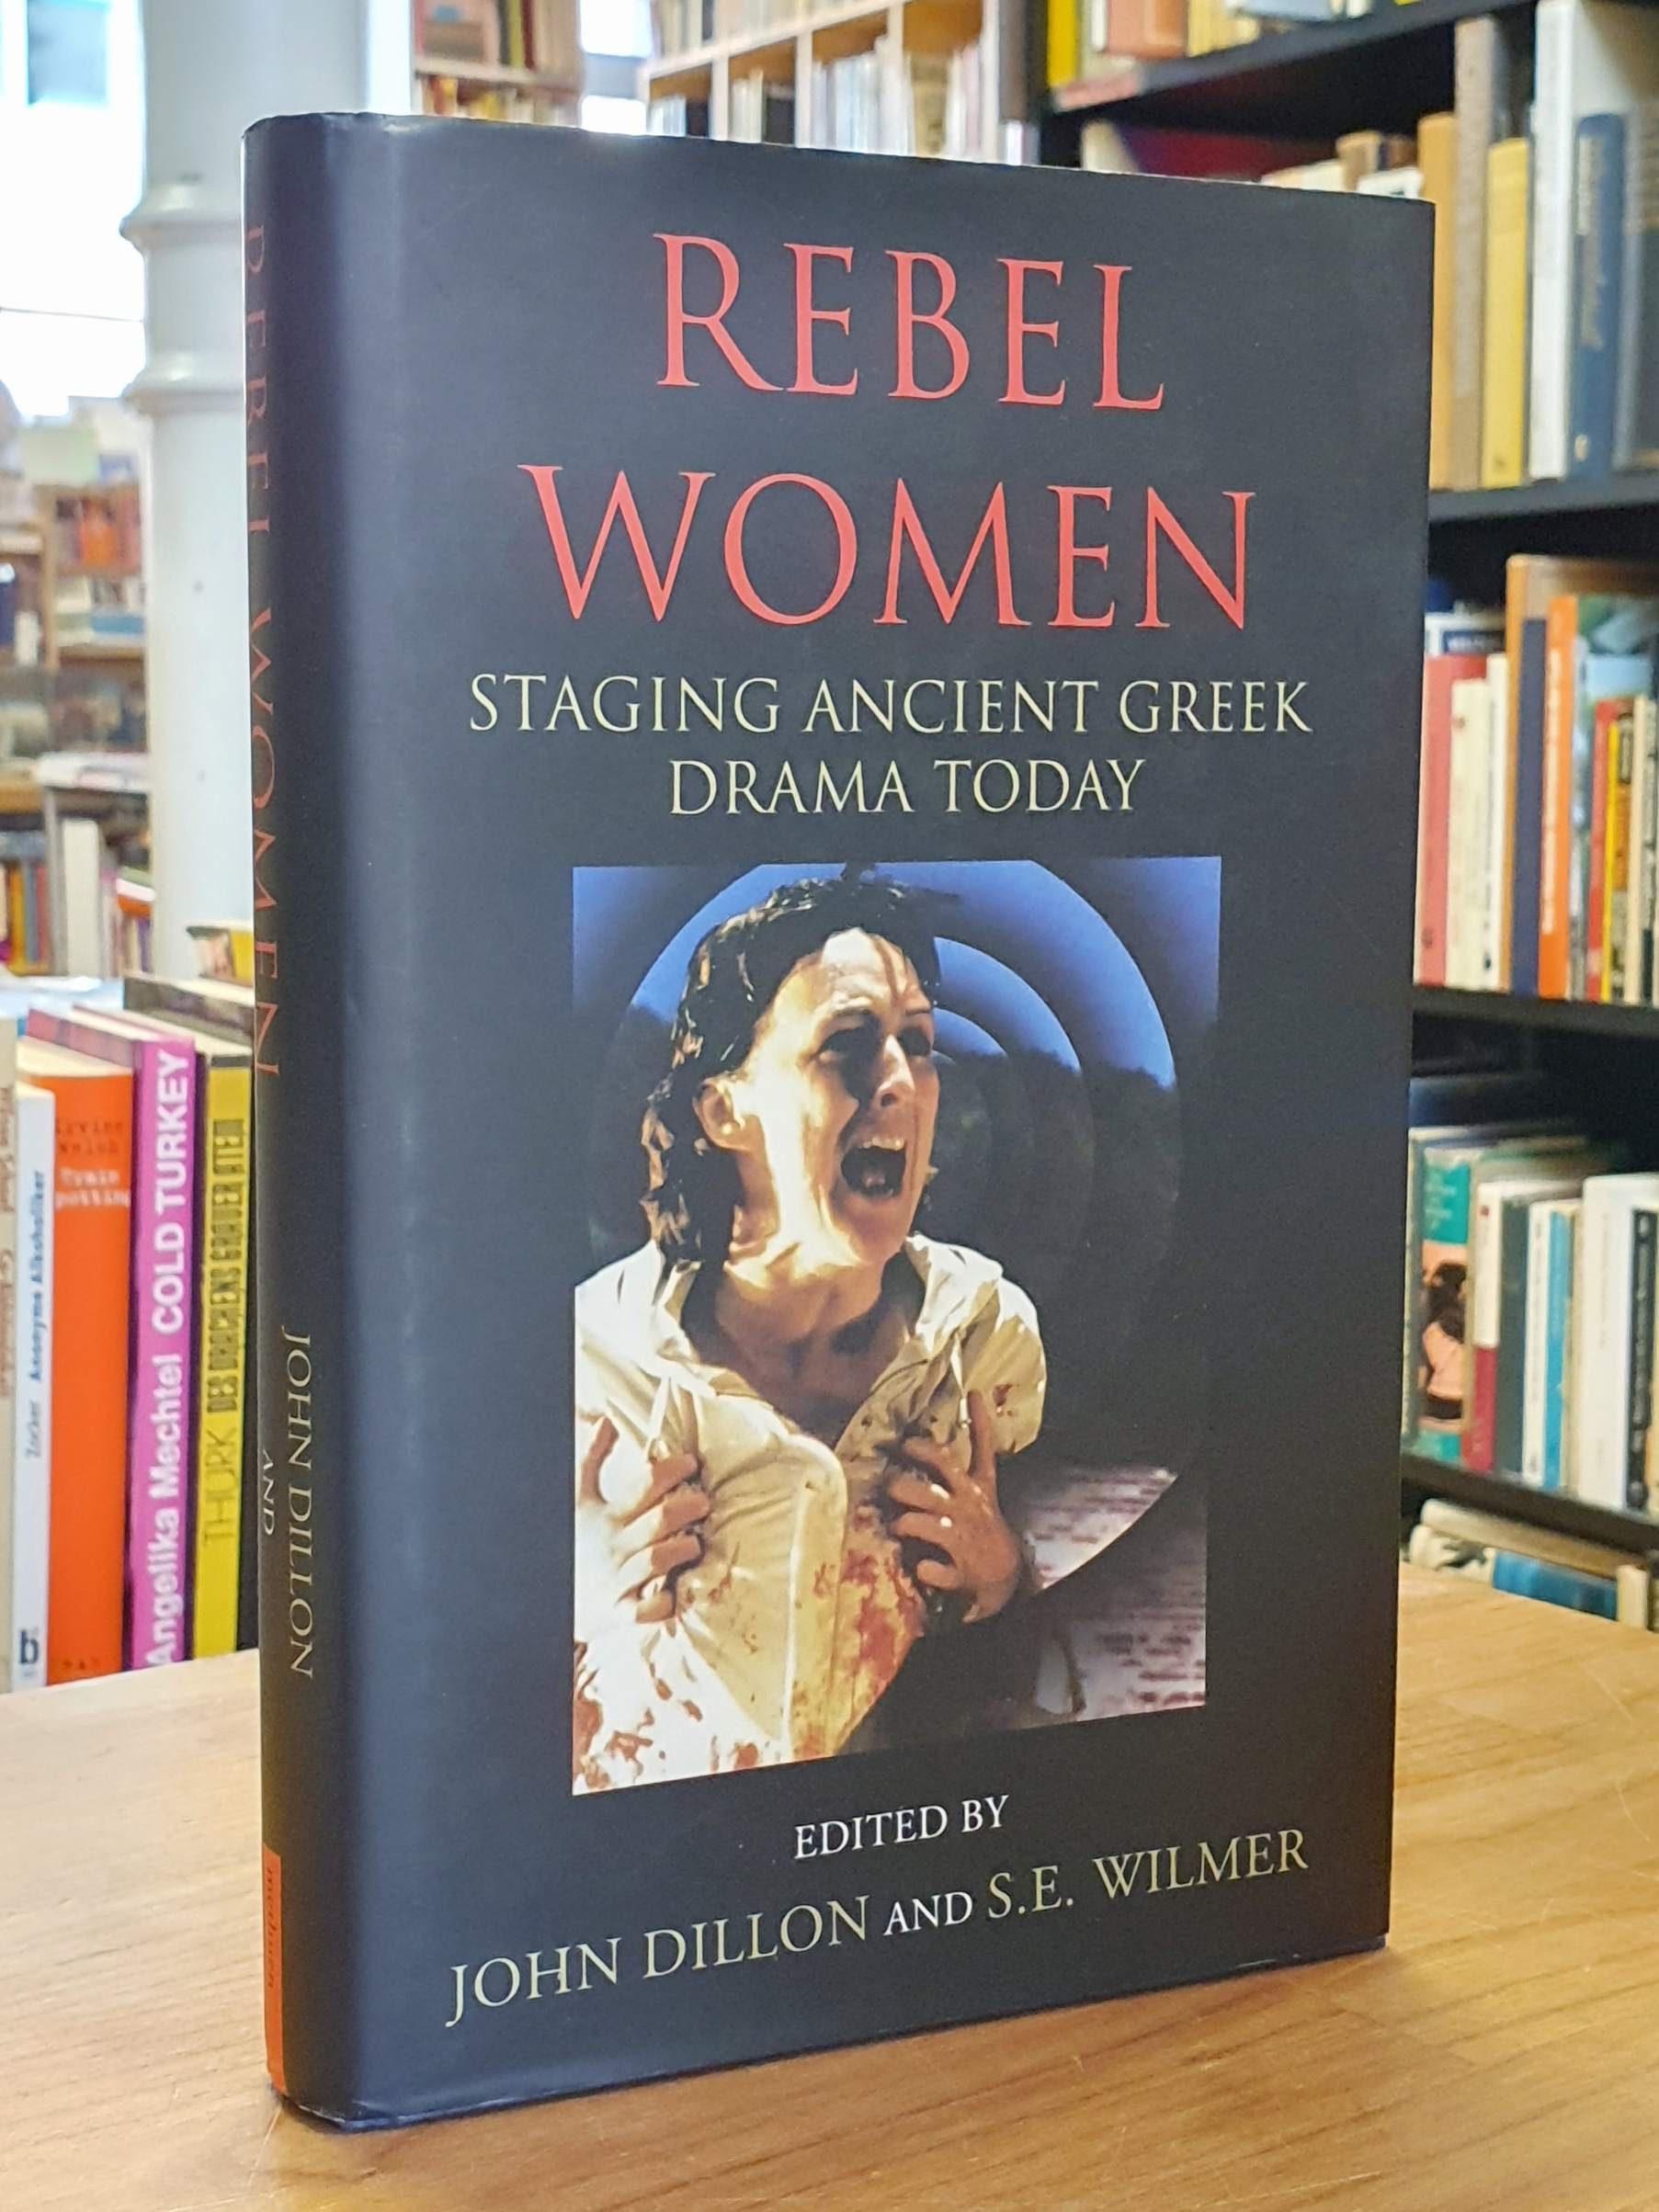 Rebel women,staging ancient Greek drama today,